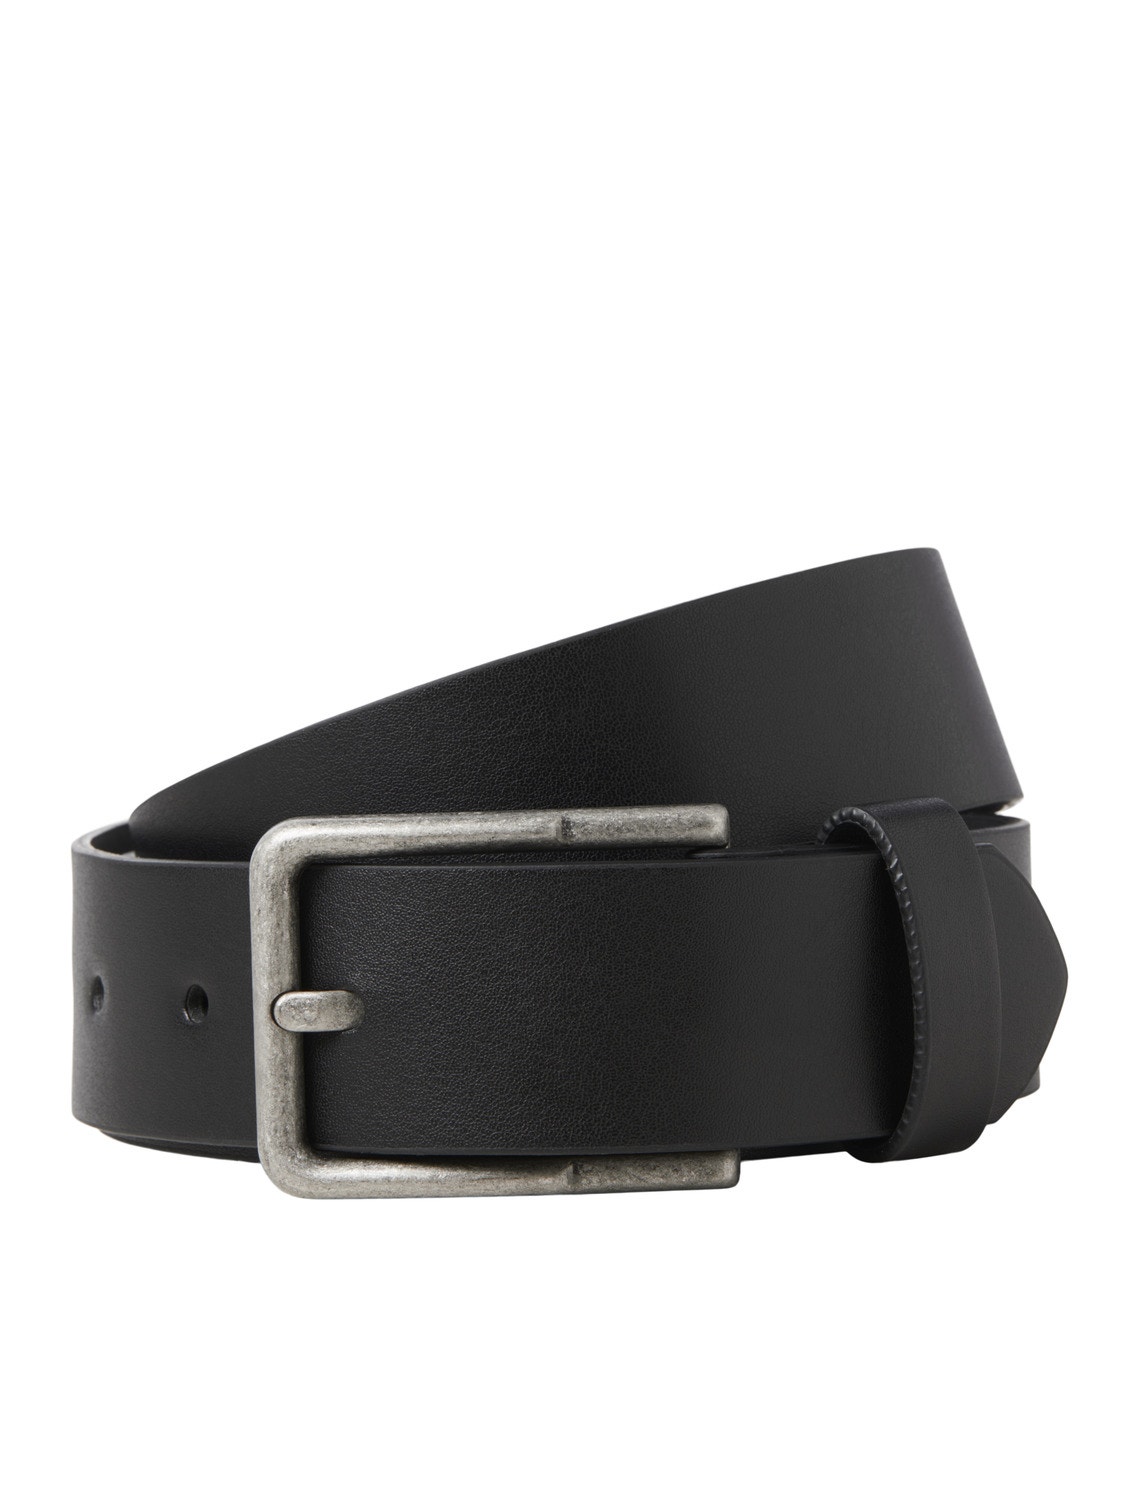 Jack & Jones Plus Size Cinturón Polyester -Black - 12255015